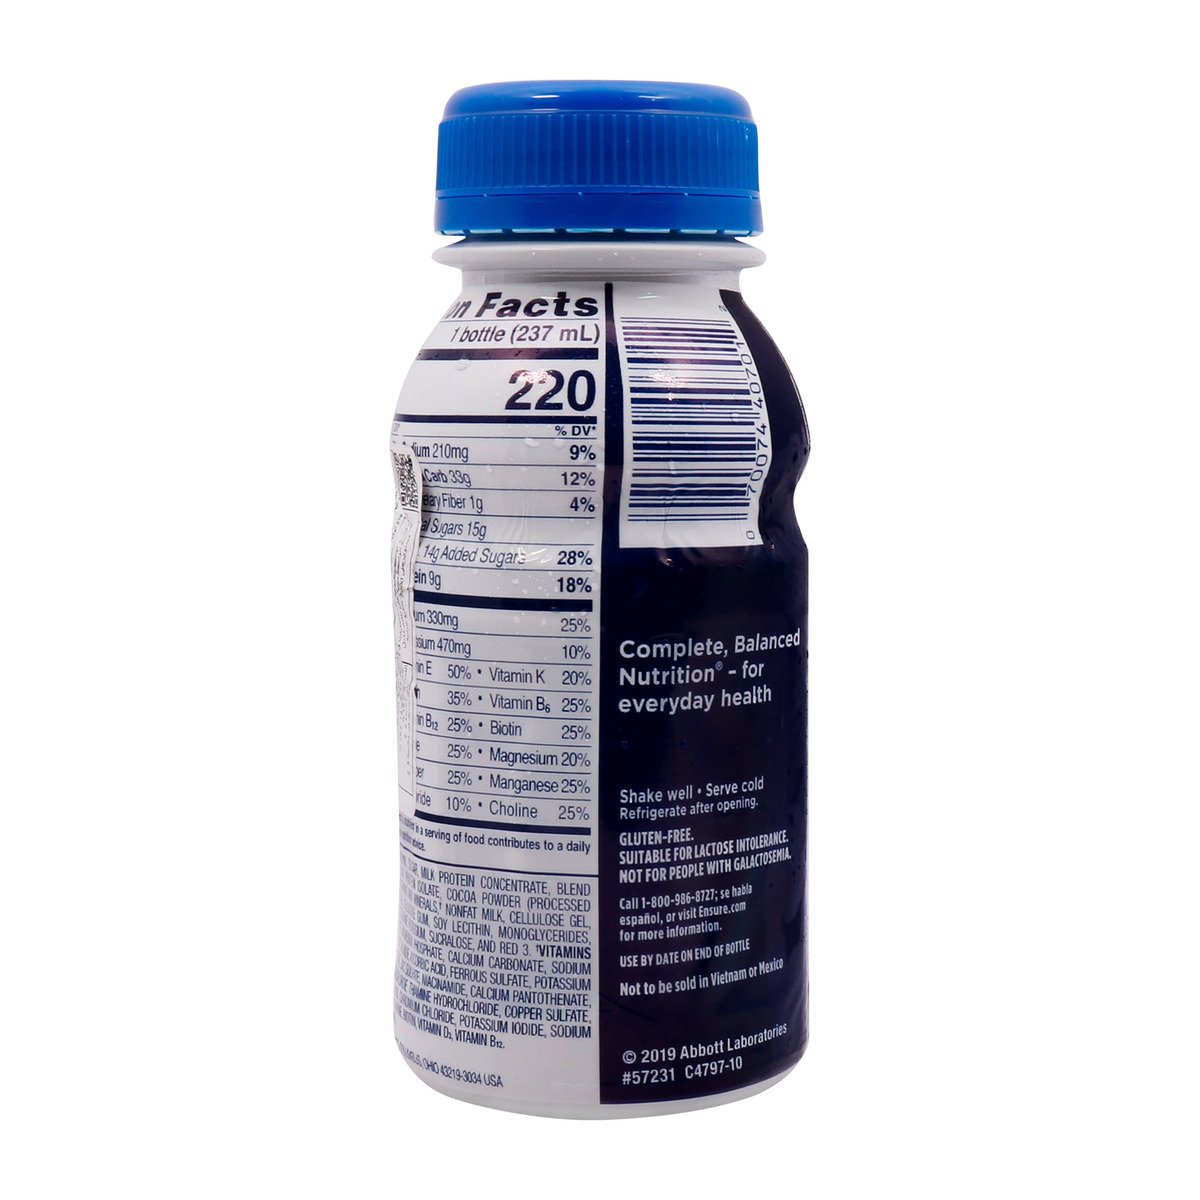 Ensure Original Nutrition Shake Milk Chocolate, 237 ml